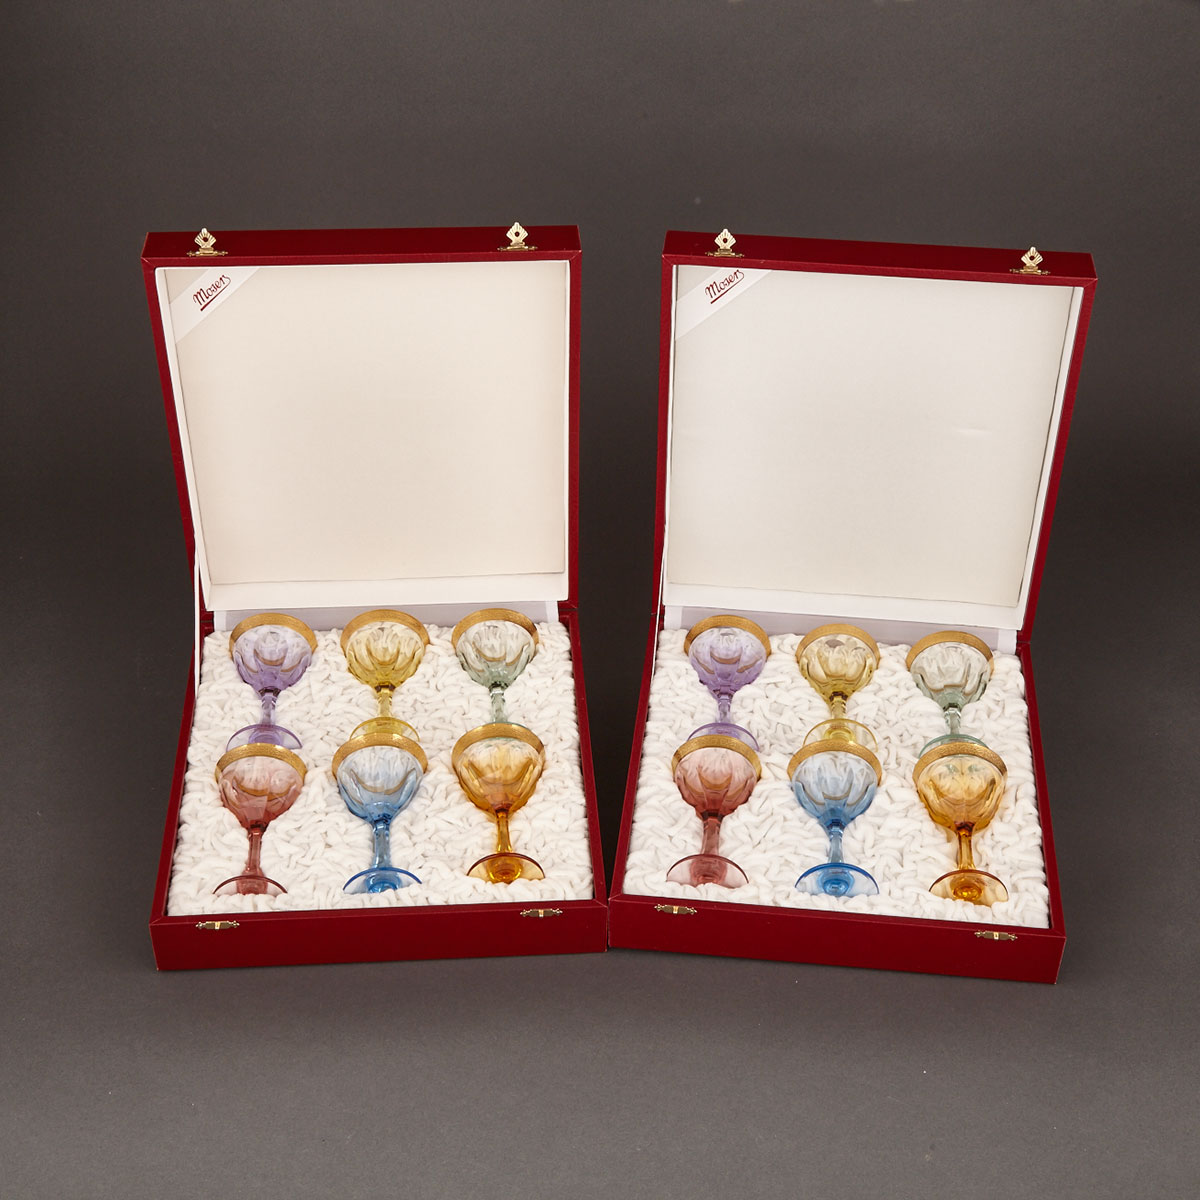 Set of Twelve Moser ‘Lady Hamilton’ Gilt, Cut and Coloured Glass Liqueur Glasses, 20th century